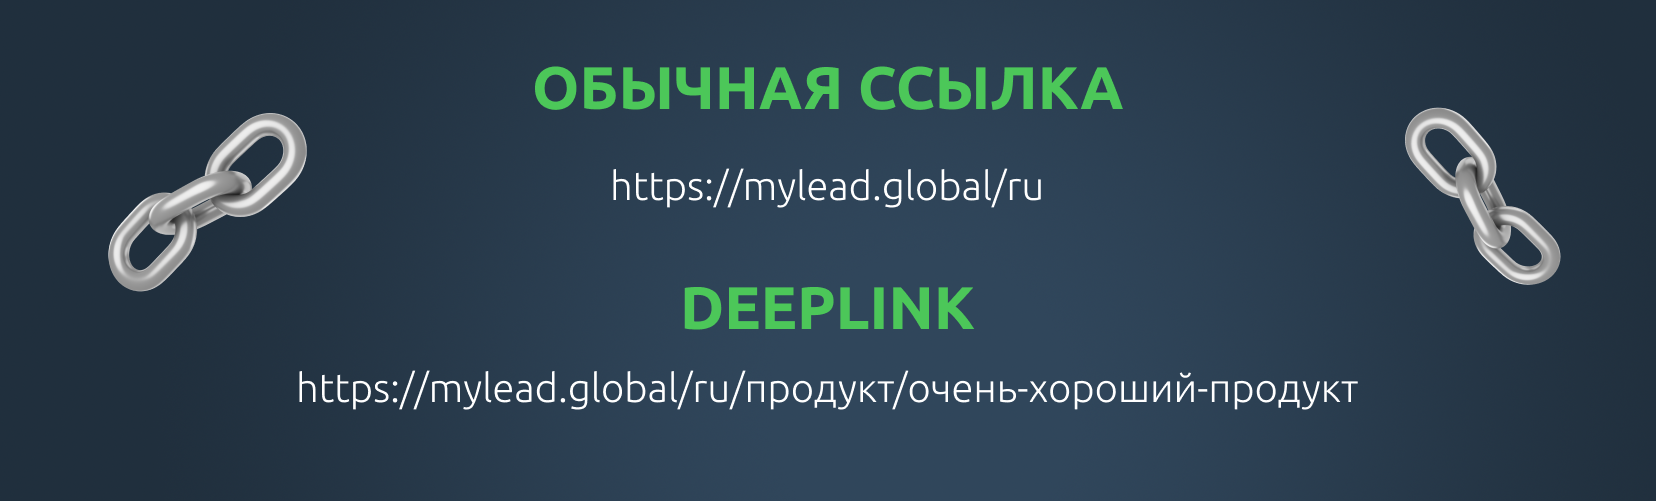 deep link example